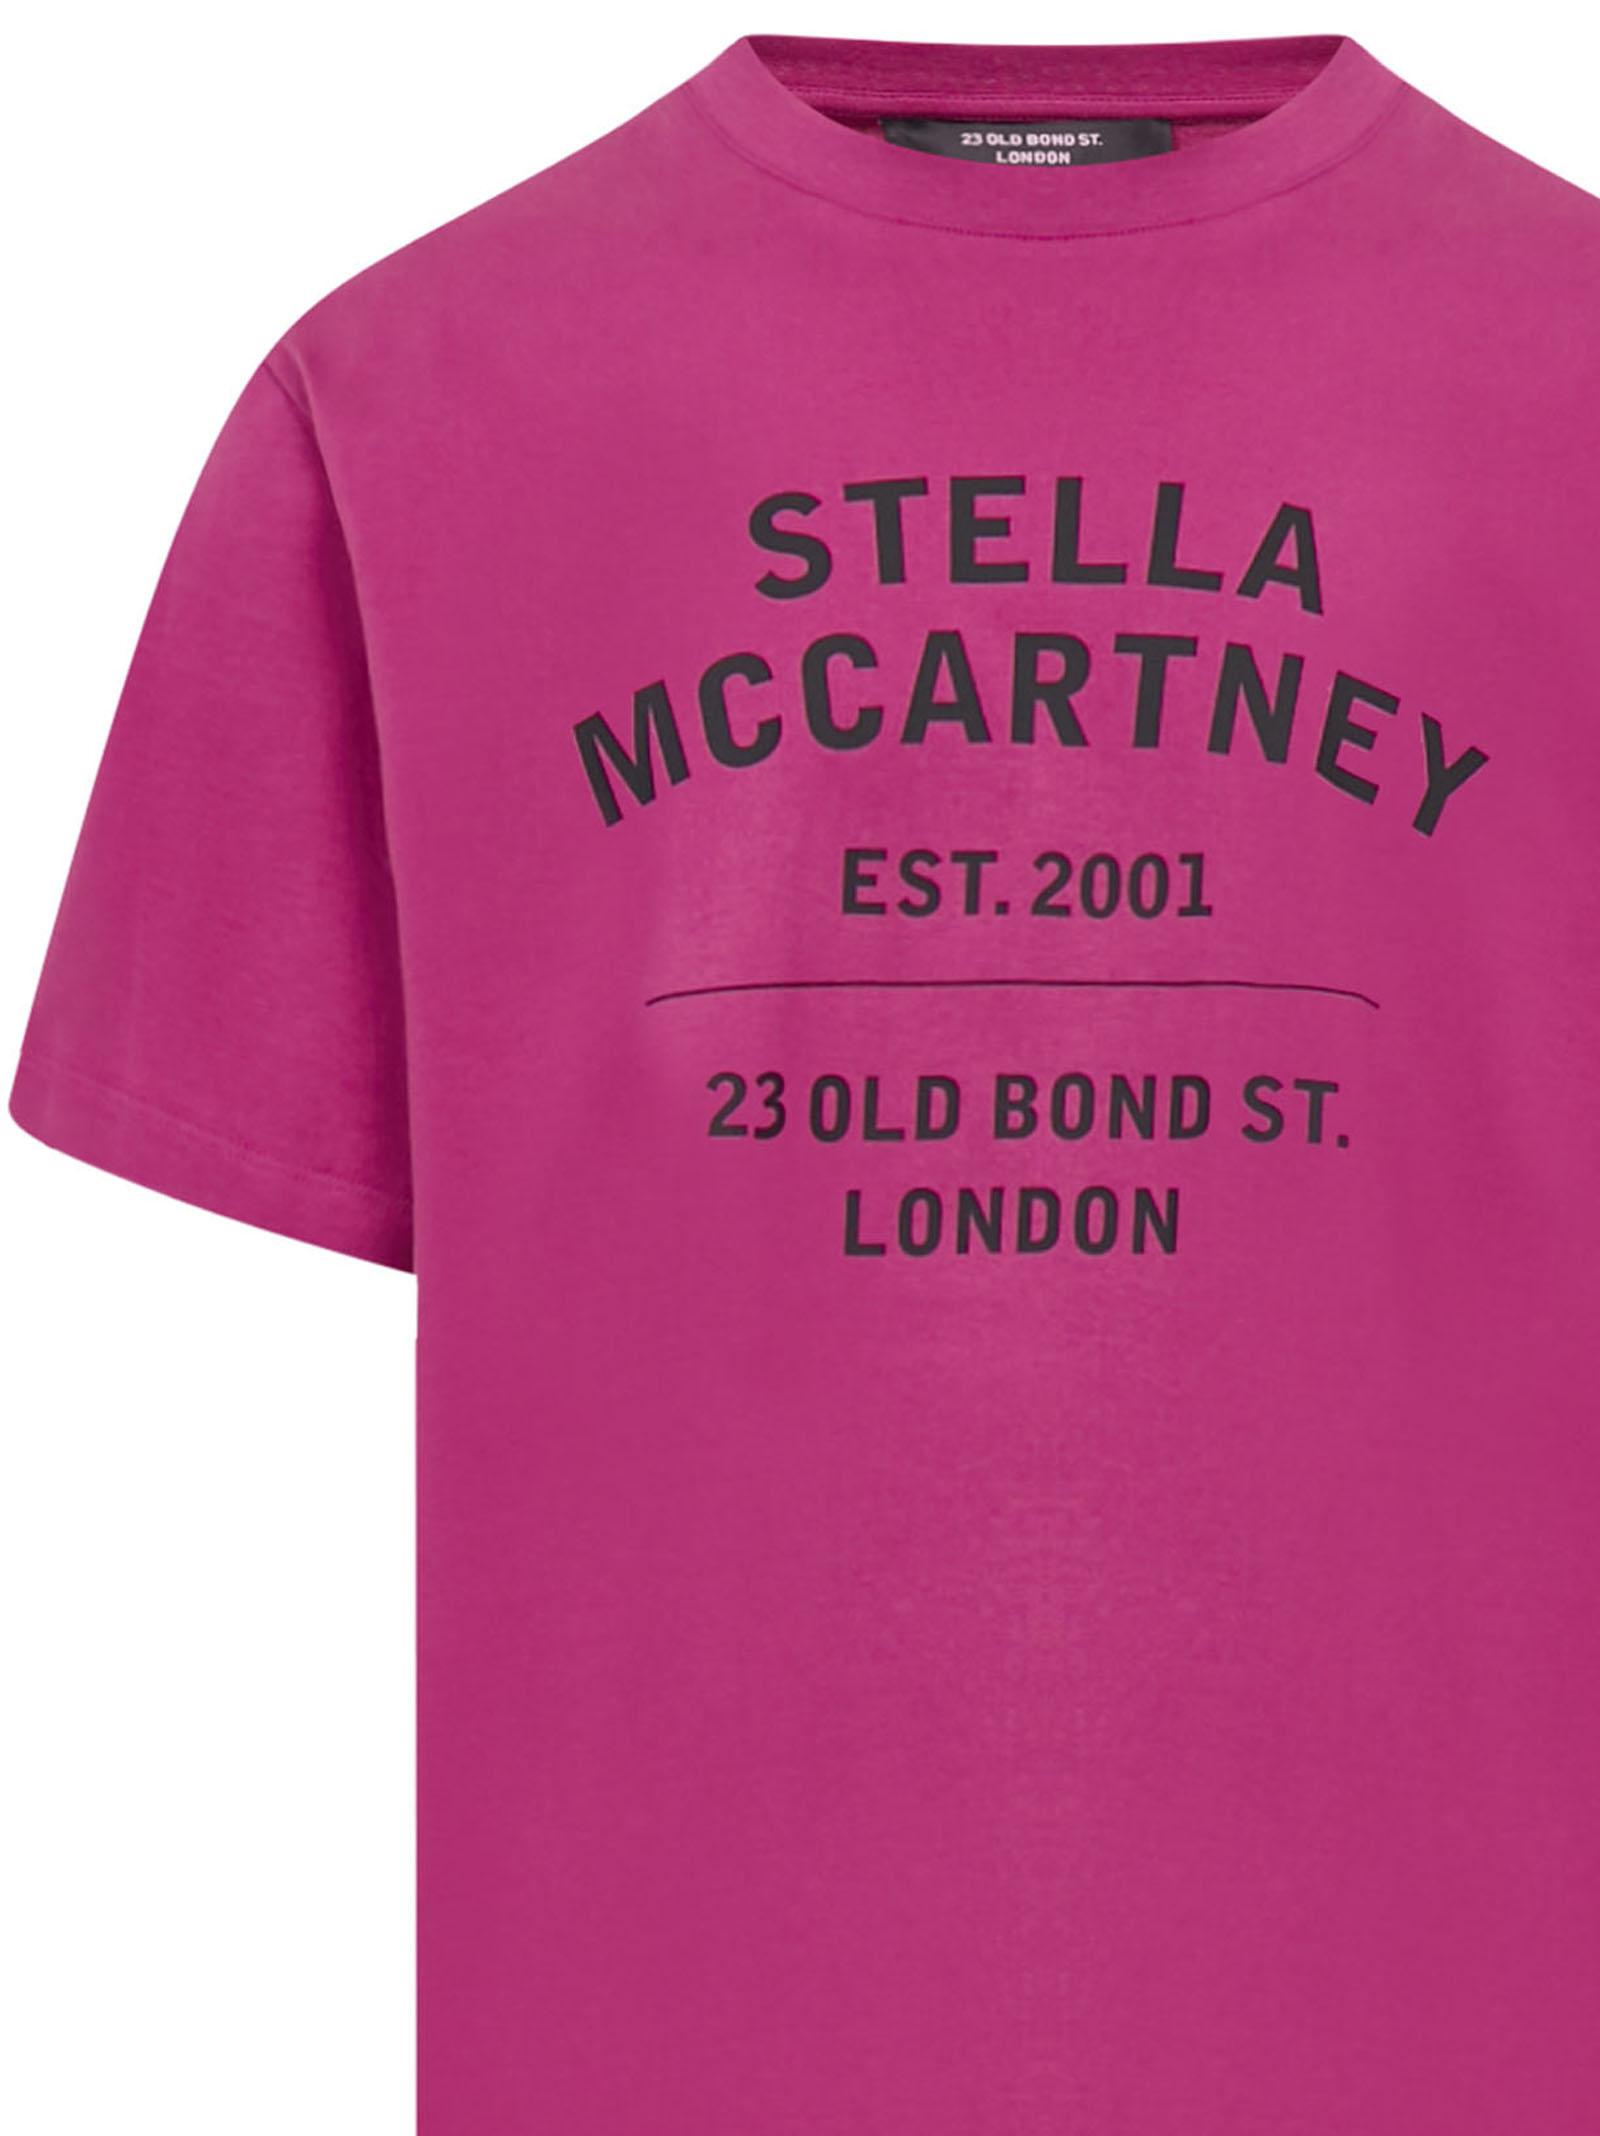 Stella McCartney Cotton T-shirt in Pink - Lyst